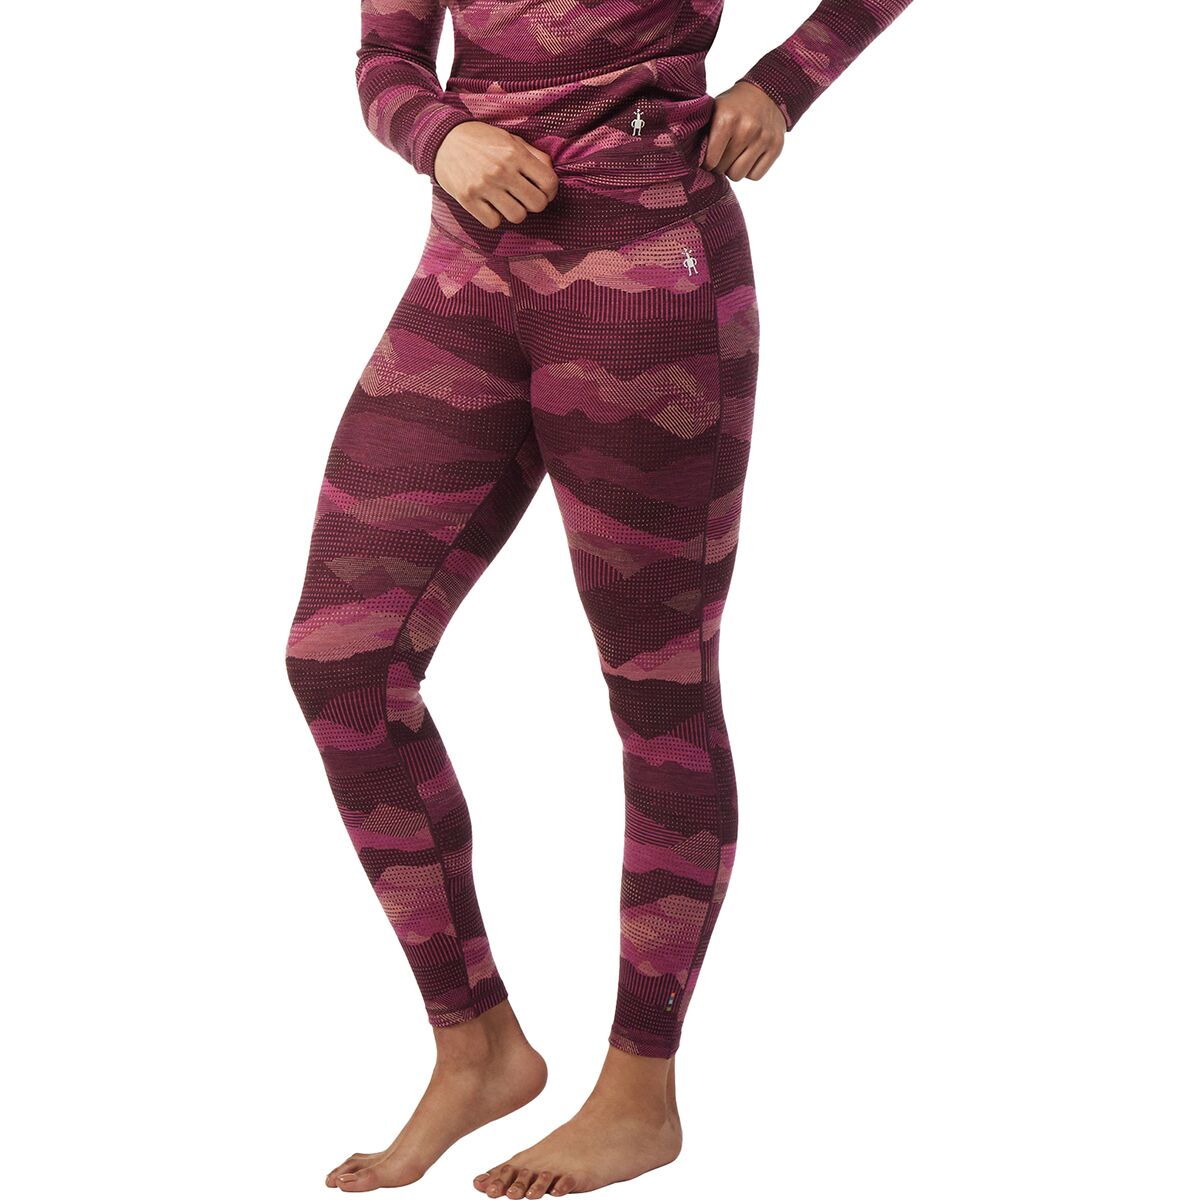 Smartwool Classic Thermal Merino Base Layer Pattern Bottom - Women's Festive Fuchsia Mountain Scape